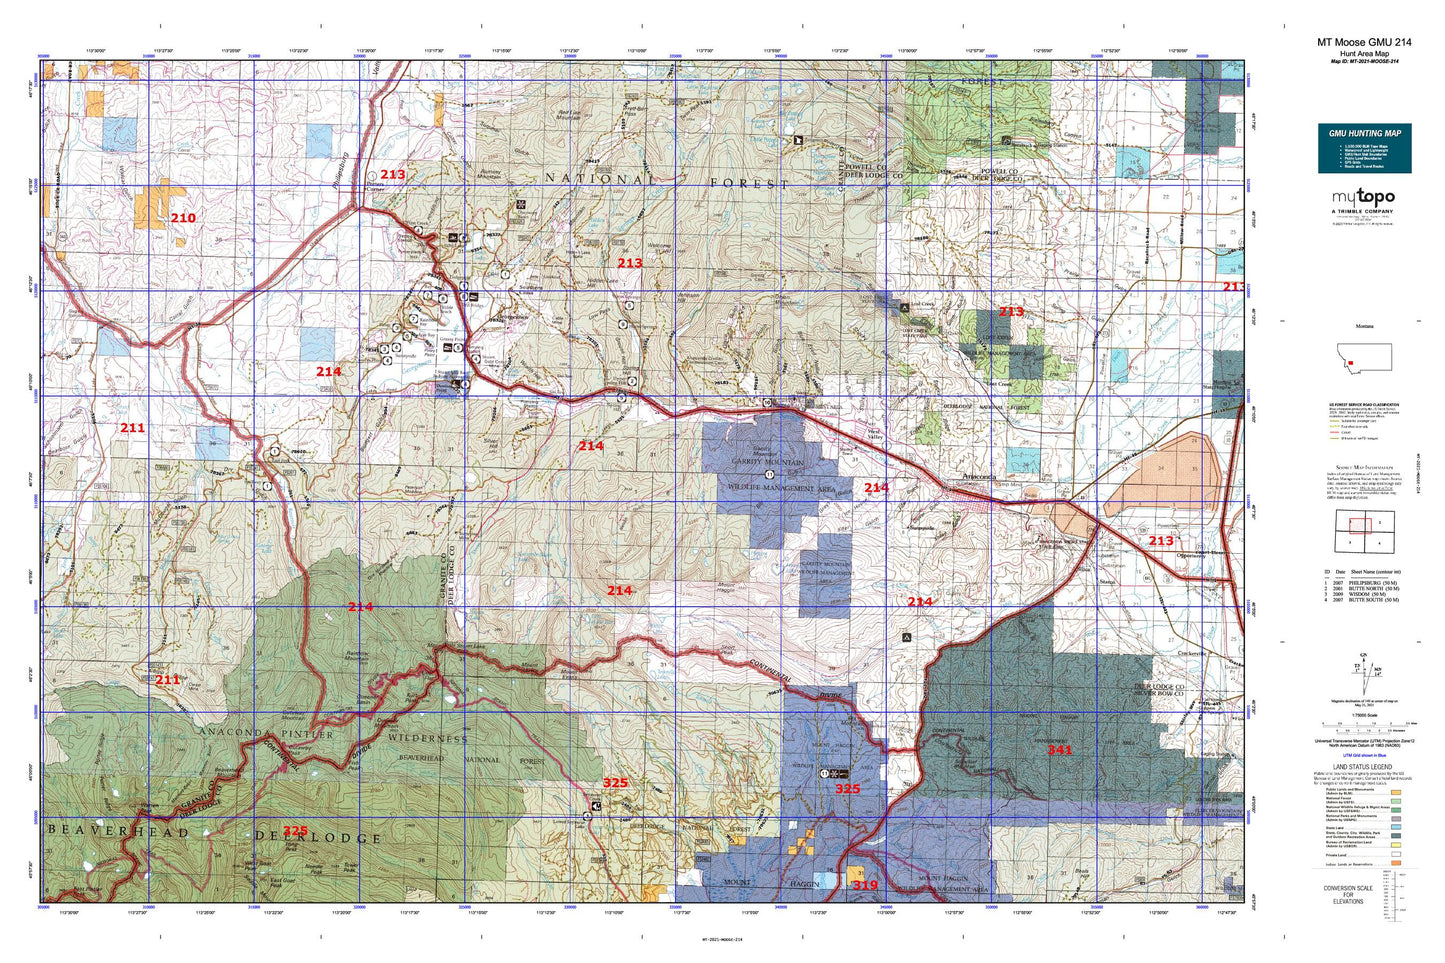 Montana Moose GMU 214 Map Image